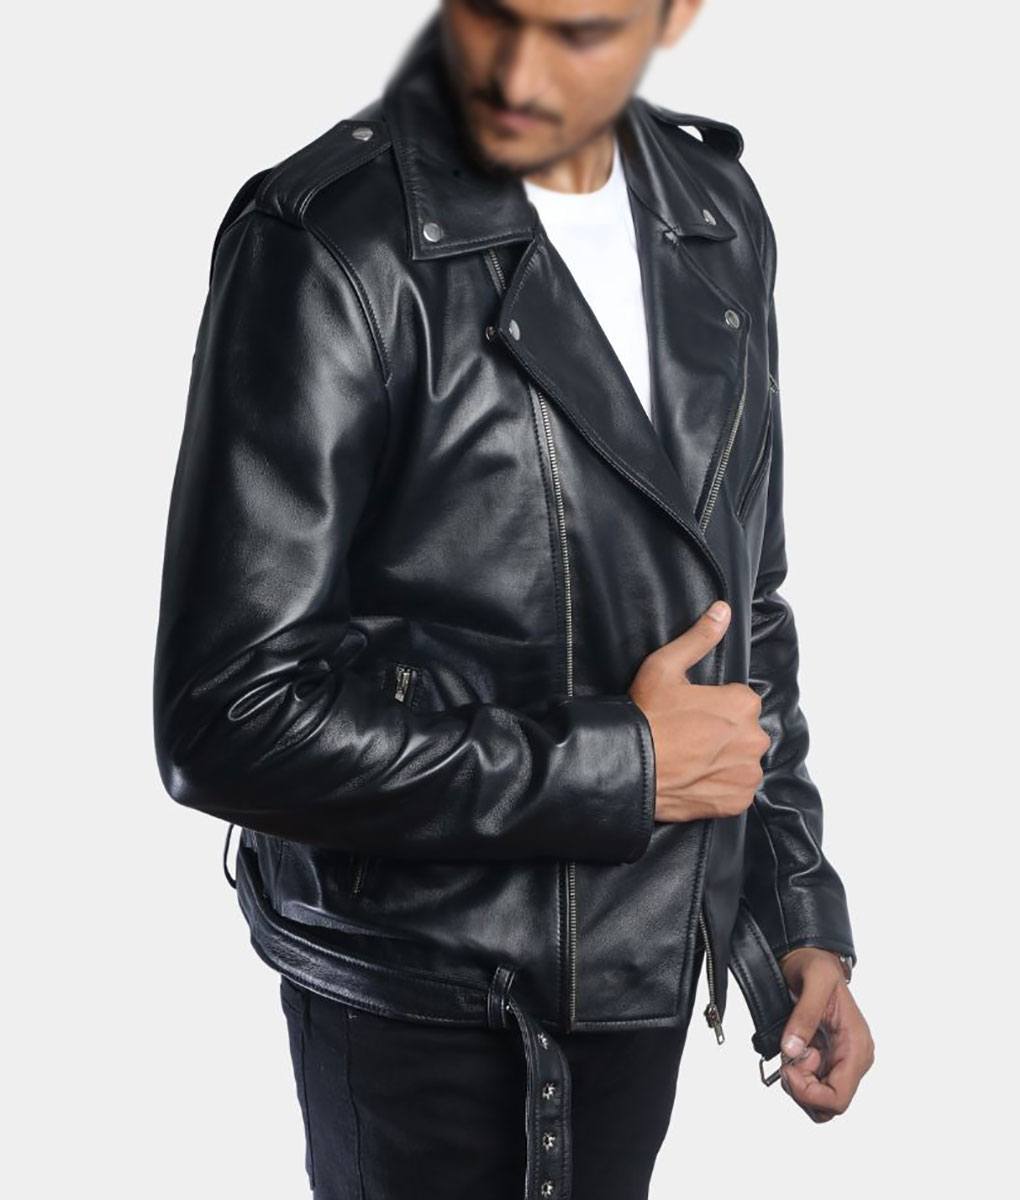 Marlon Brando The Wild One Black Leather Jacket (2)